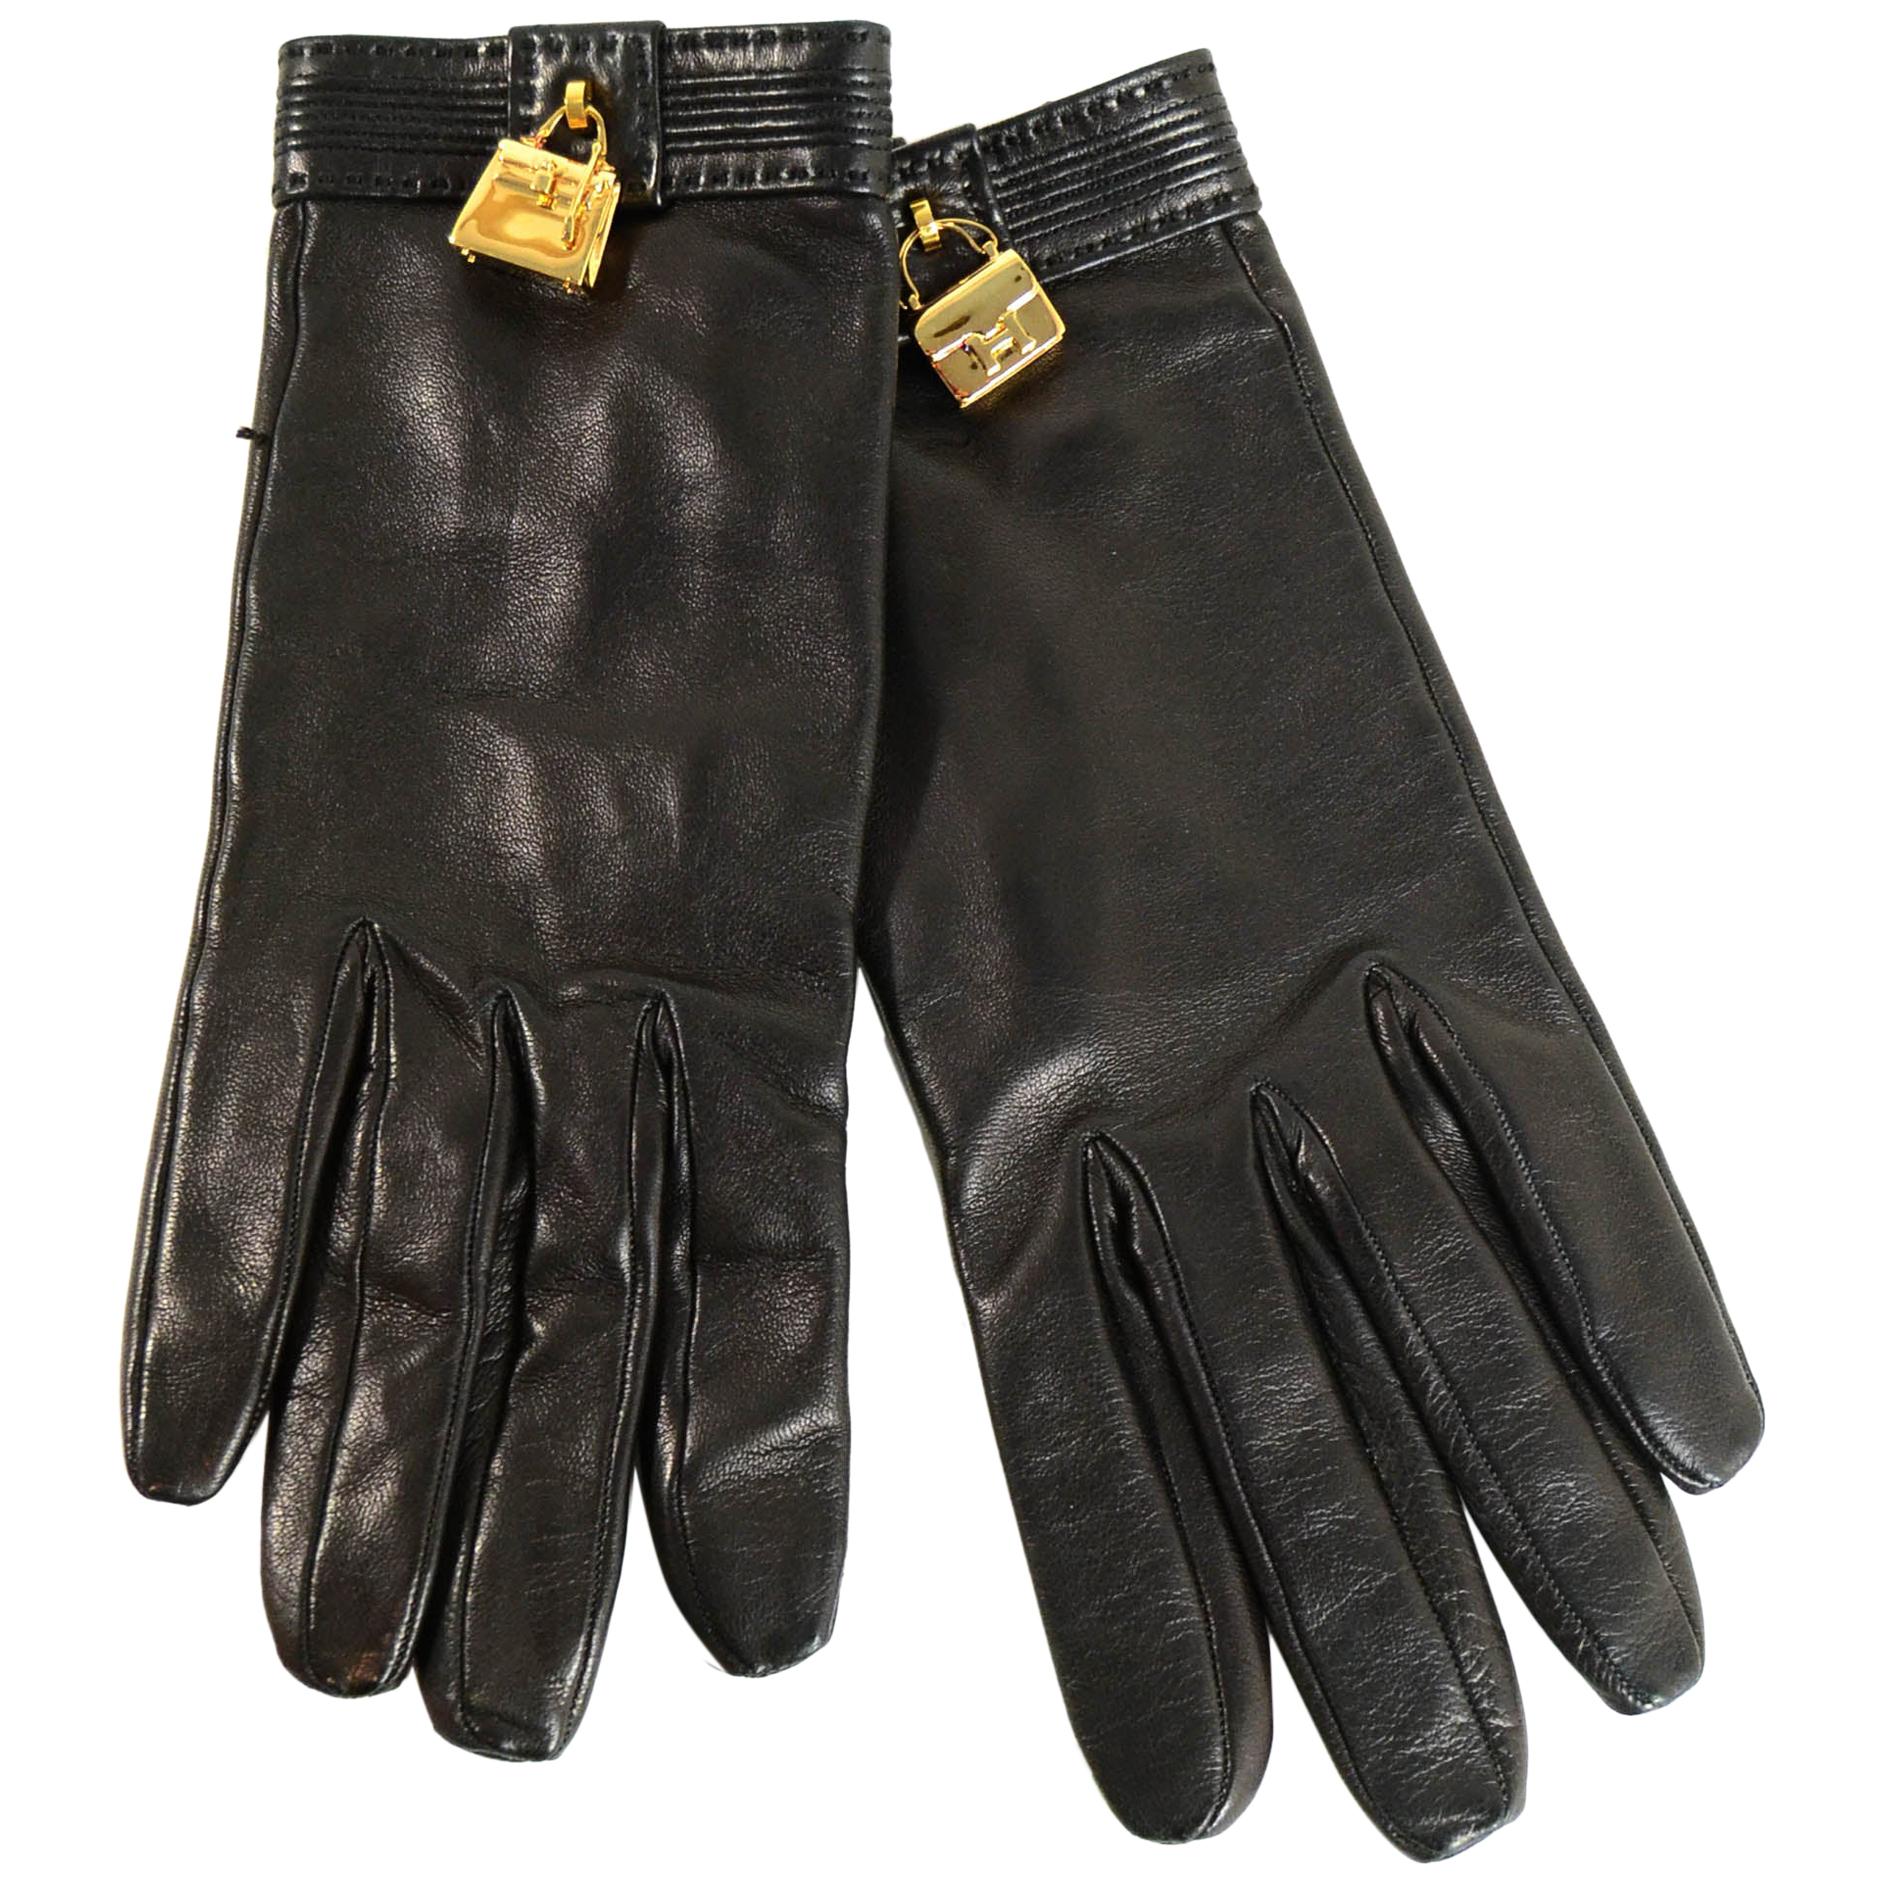 Hermes Black Leather Constance/Kelly Charm Gloves sz 7.5